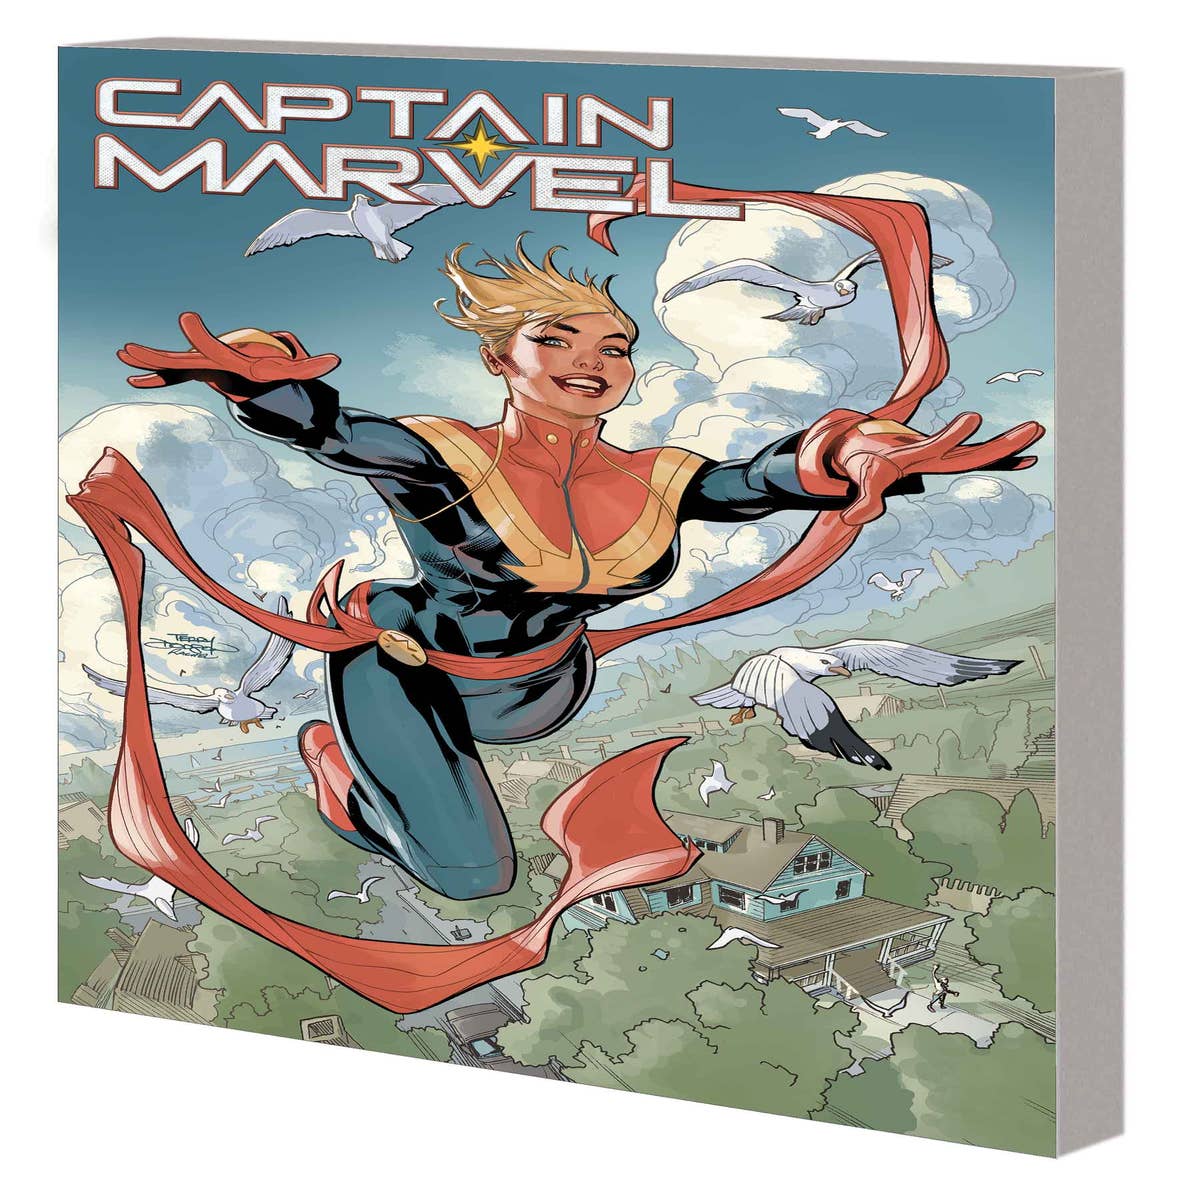 Capitã Marvel  Captain marvel, Marvel characters, Marvel art